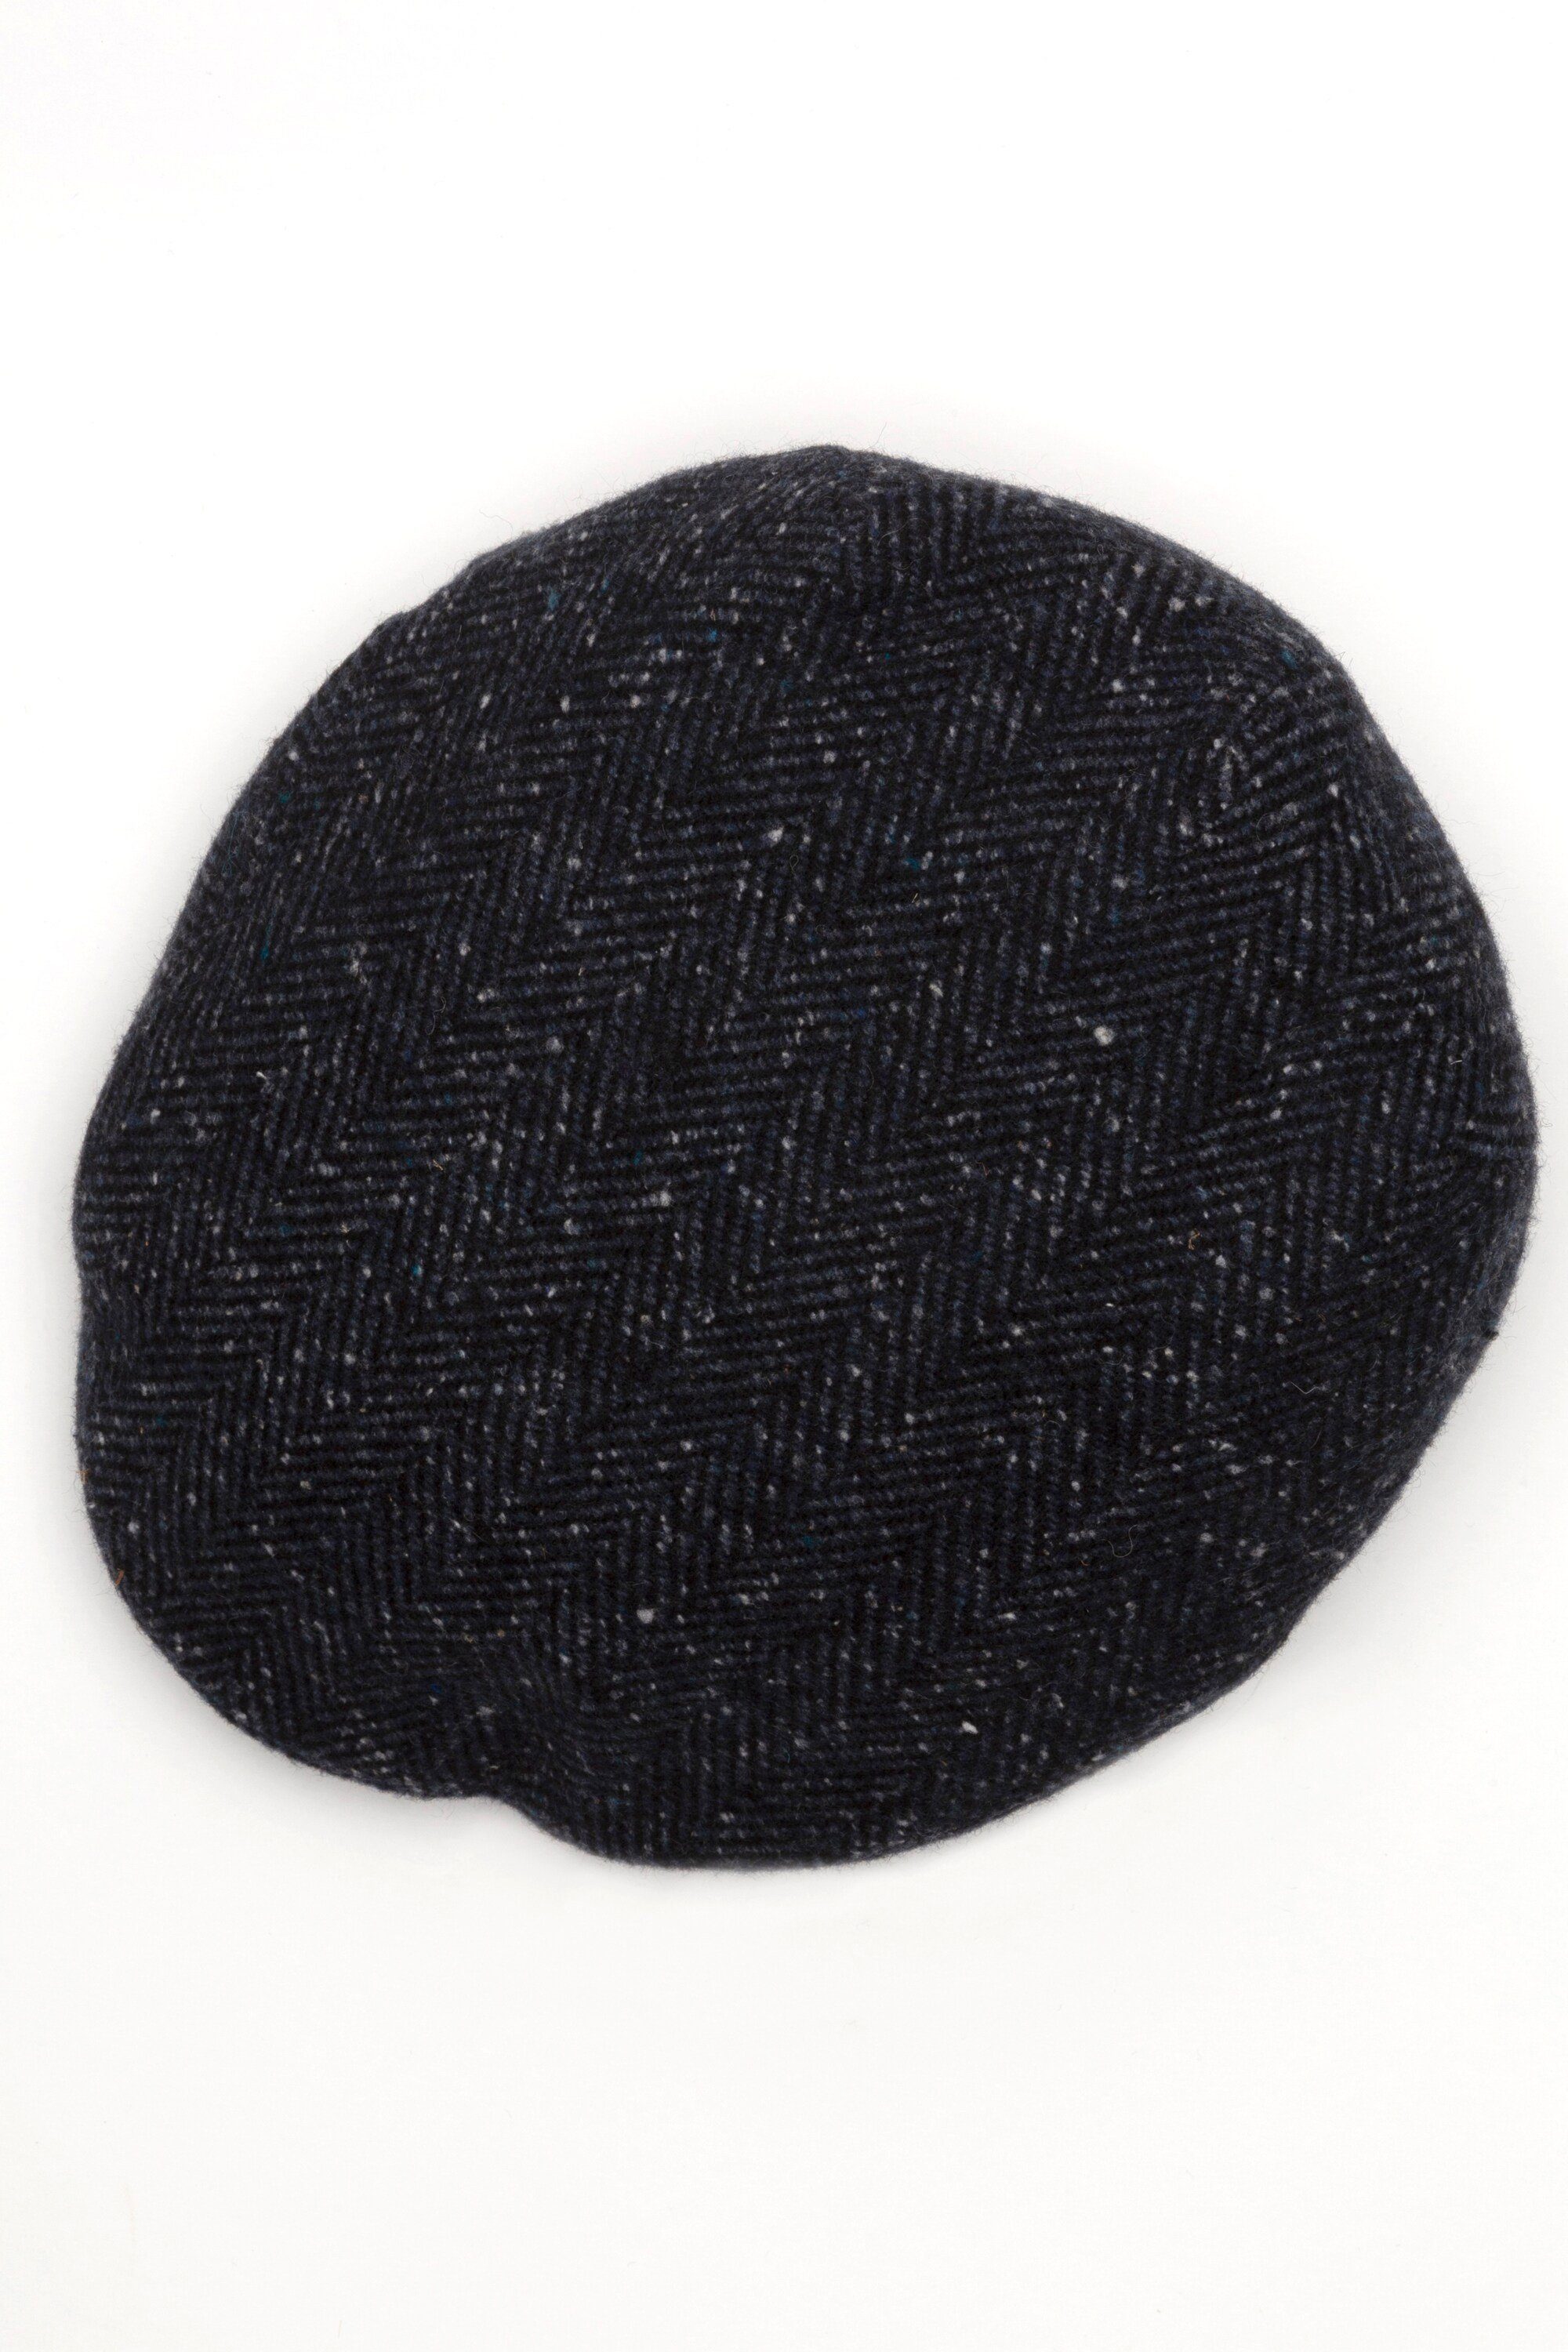 Woll-Qualität Schirmmütze Fischgrat-Muster marine dunkel Strickhandschuhe JP1880